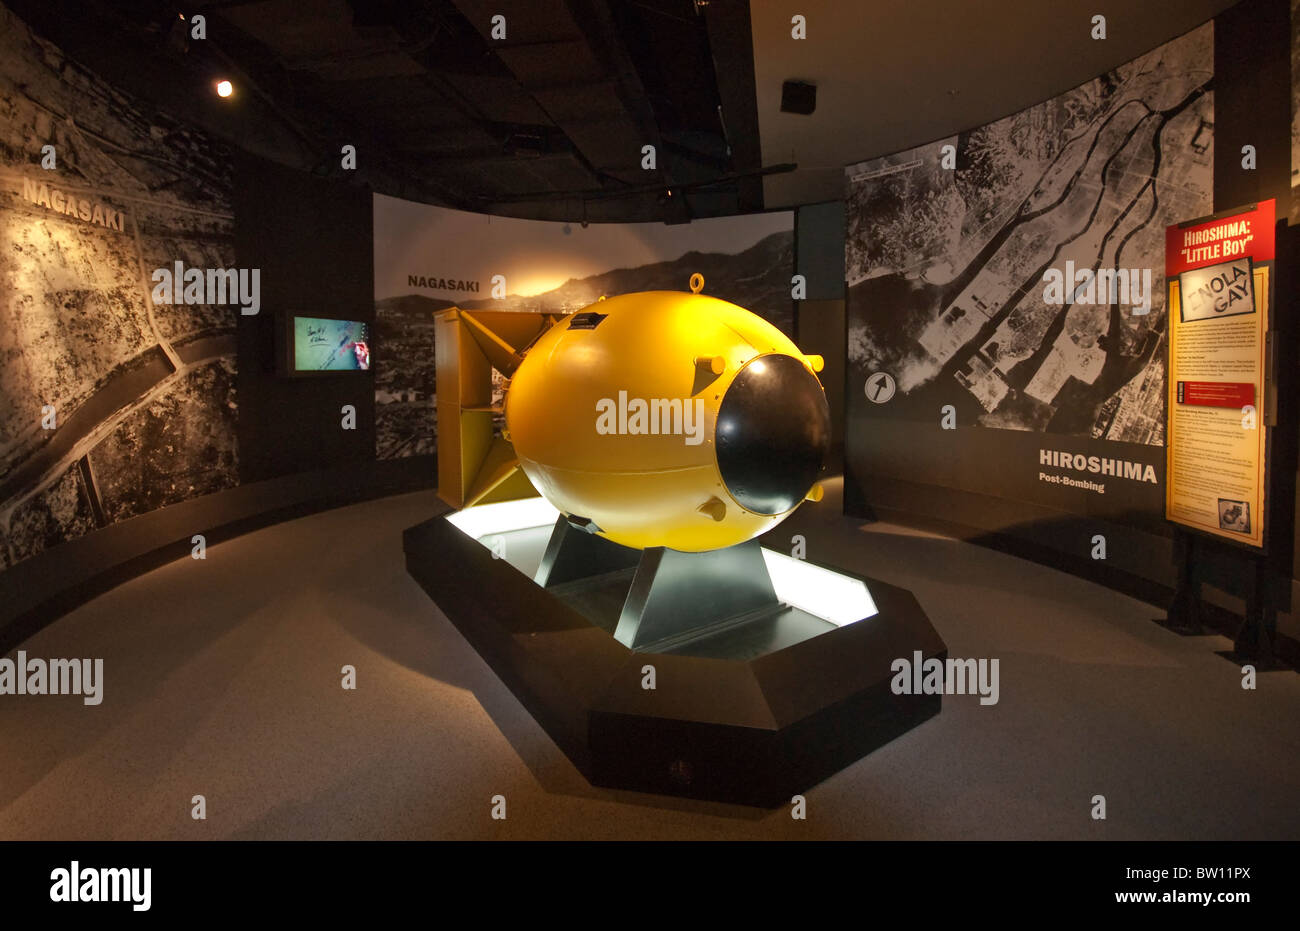 Fat Man atomic bomb, detonated over Nagasaki, replica displayed at National Museum of the Pacific War, Fredericksburg Texas USA Stock Photo